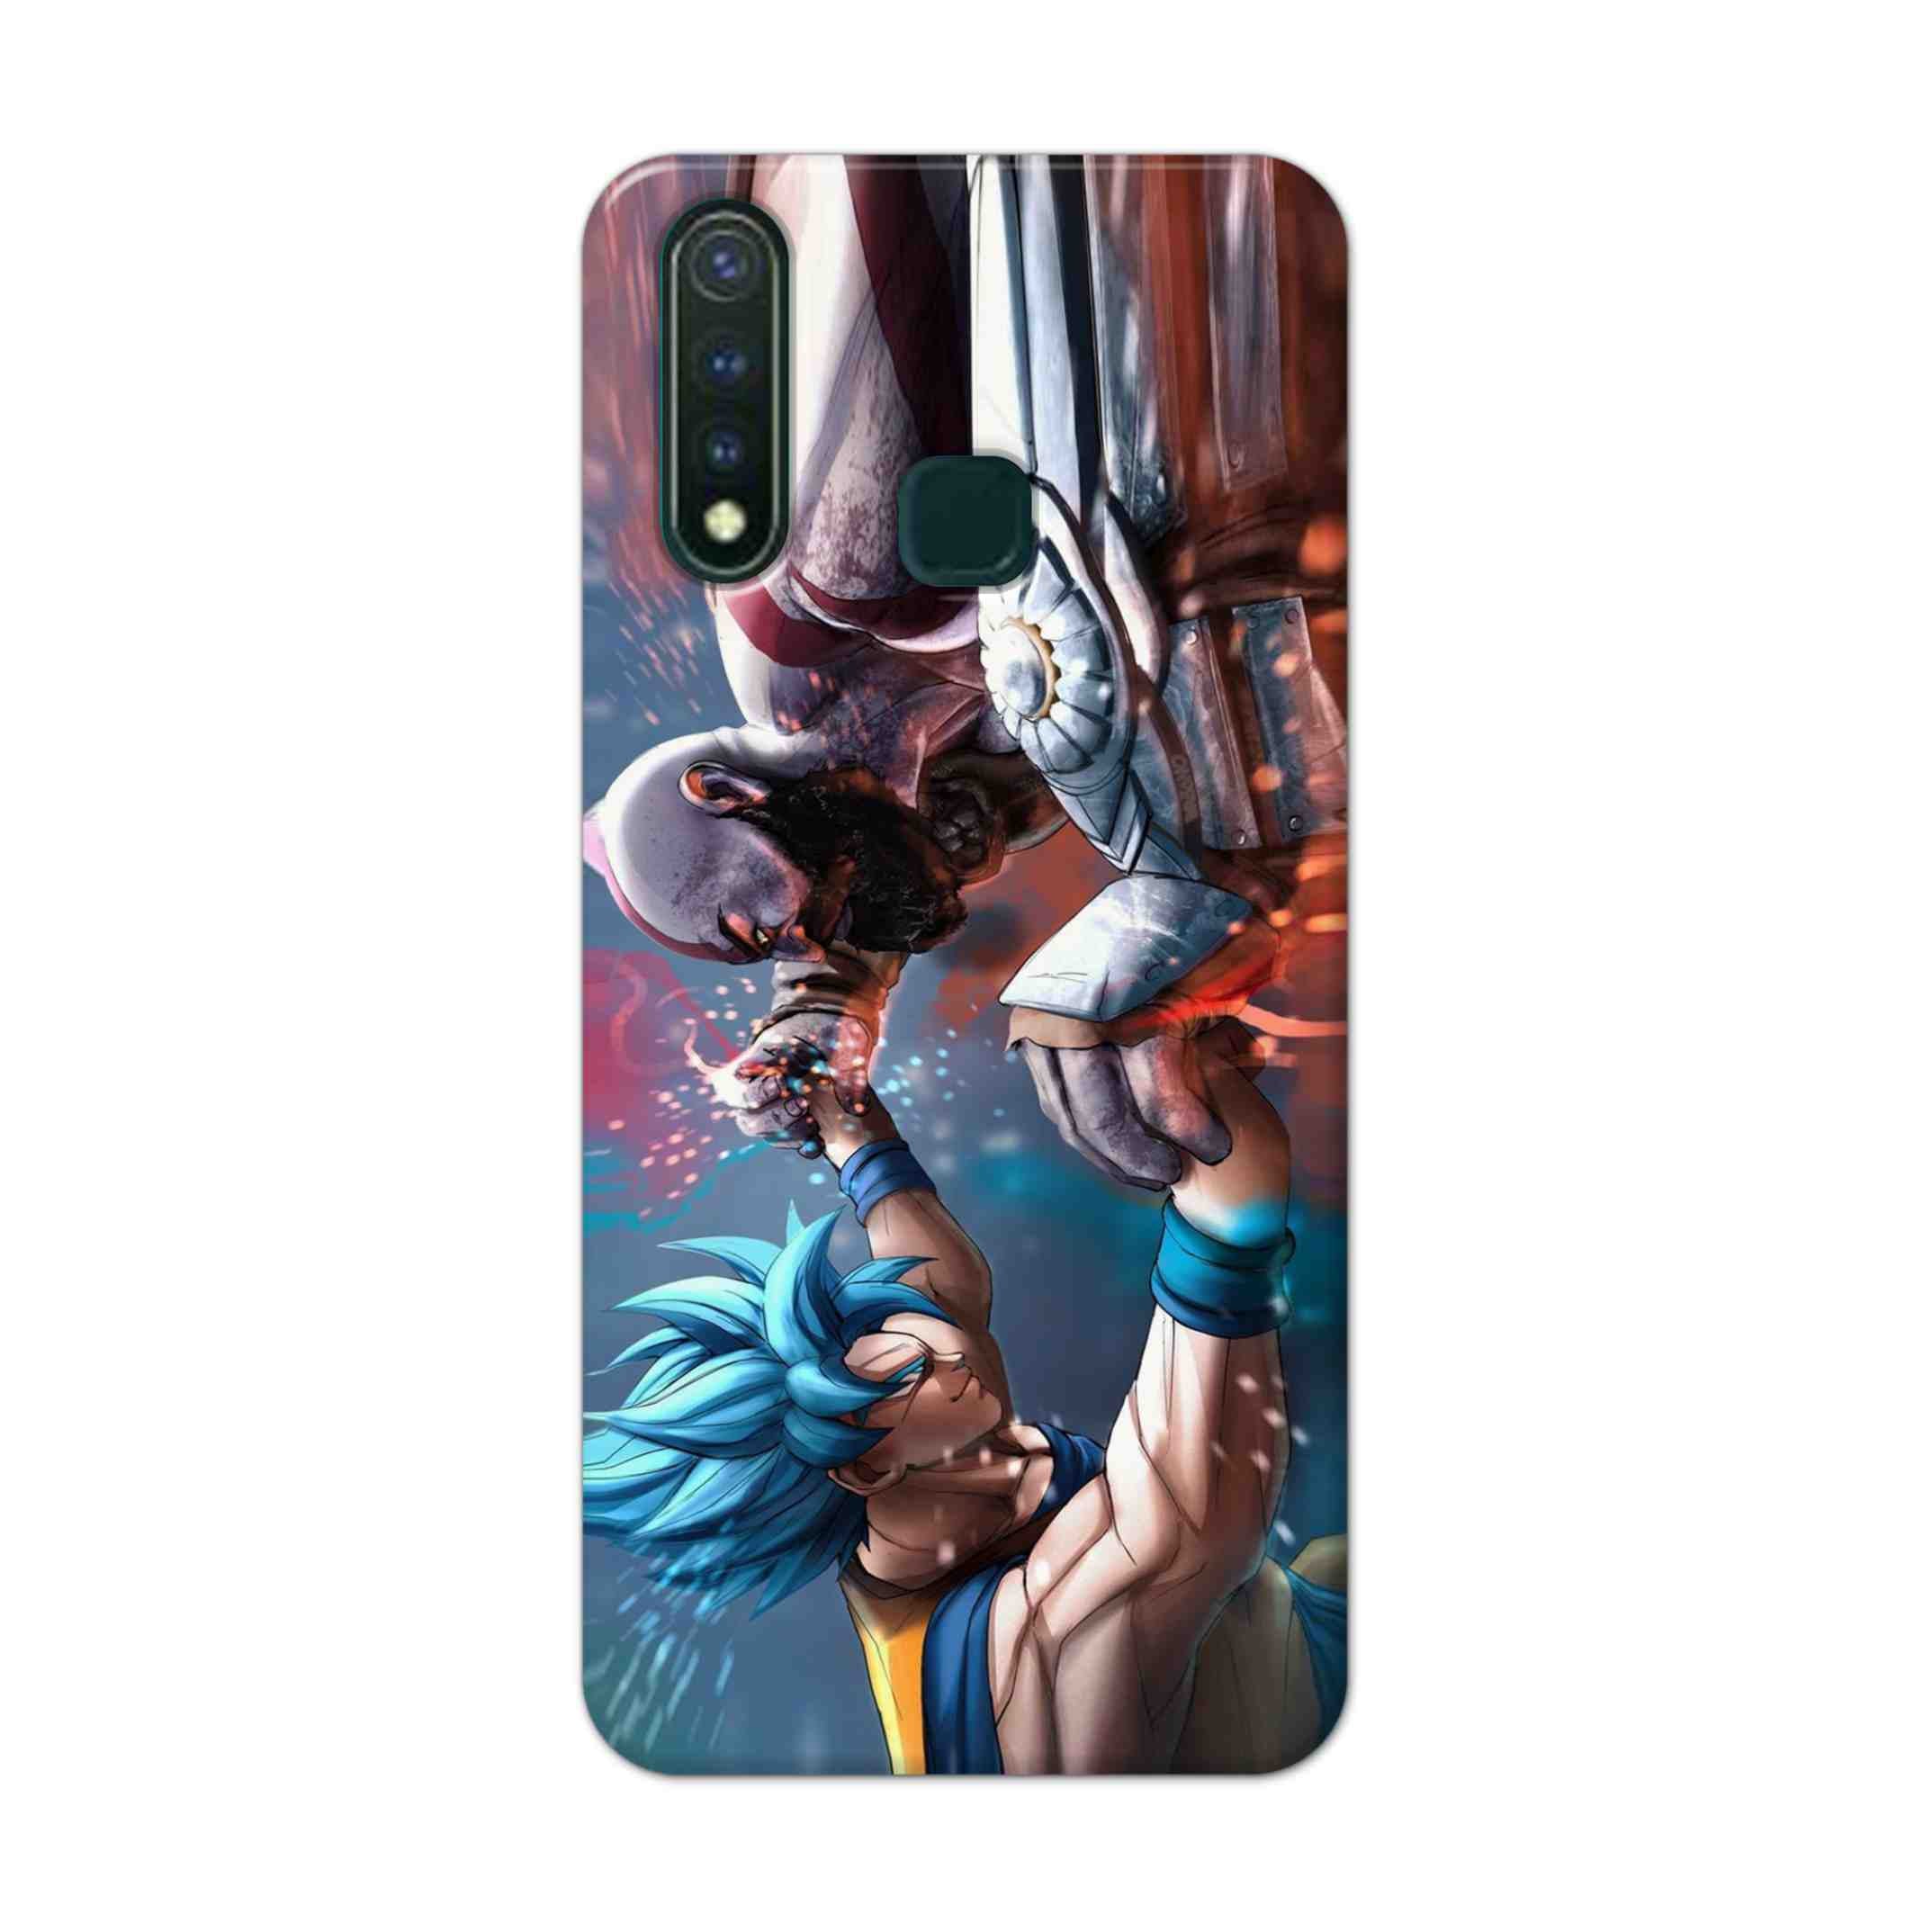 Buy Goku Vs Kratos Hard Back Mobile Phone Case Cover For Vivo U20 Online